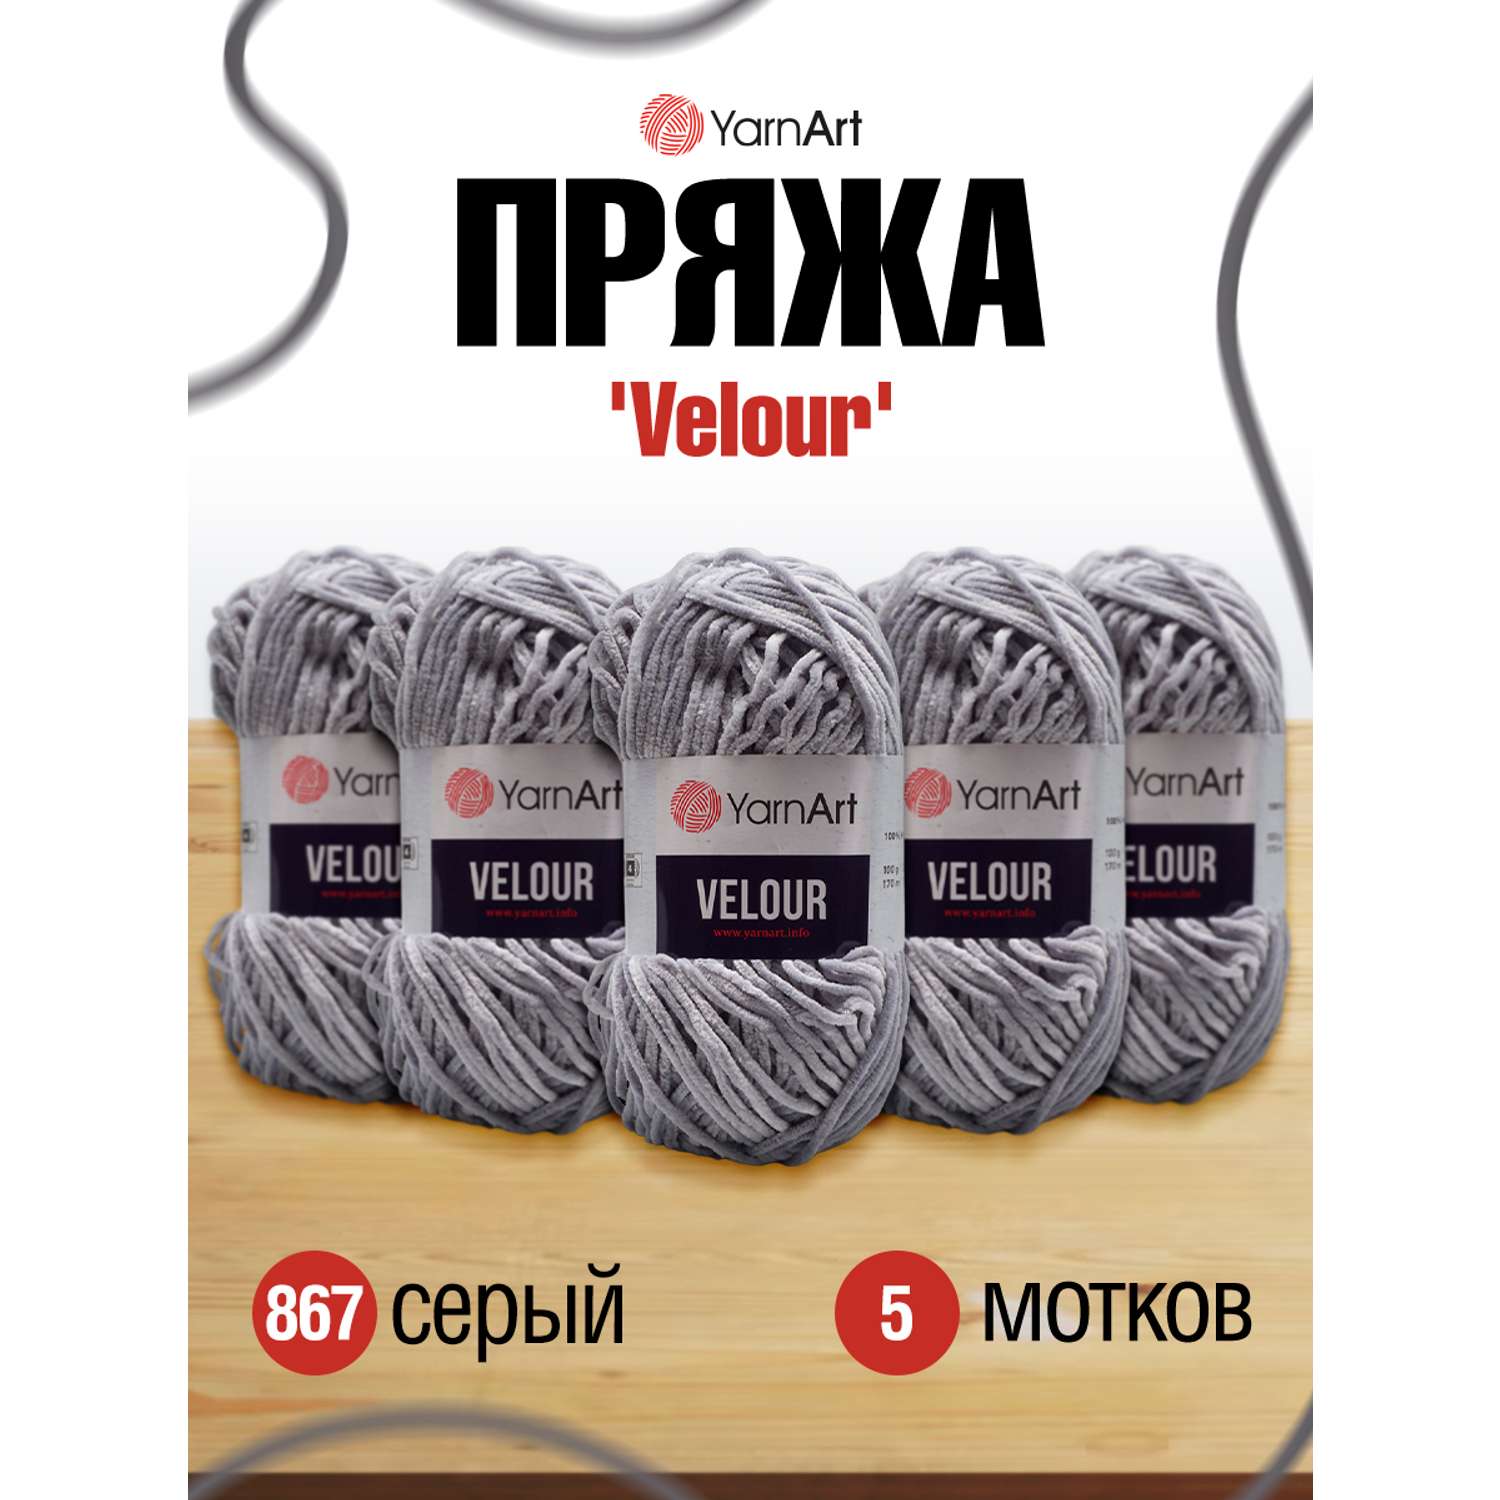 Пряжа для вязания YarnArt Velour 100 г 170 м микрополиэстер мягкая велюровая 5 мотков 867 серый - фото 1